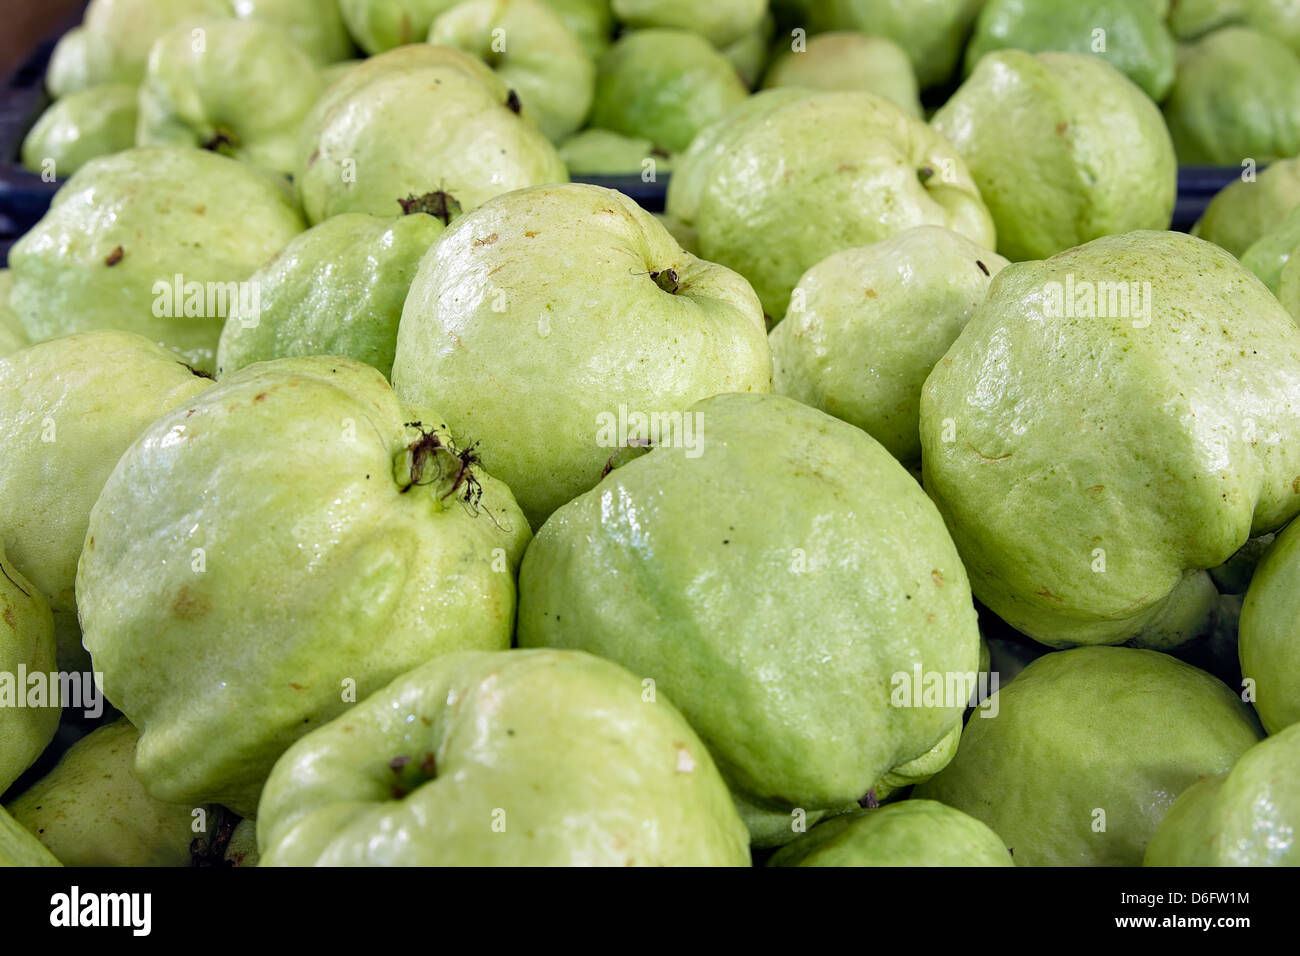 Green Apple Guavas in Southeast Asian Market Stock Photo